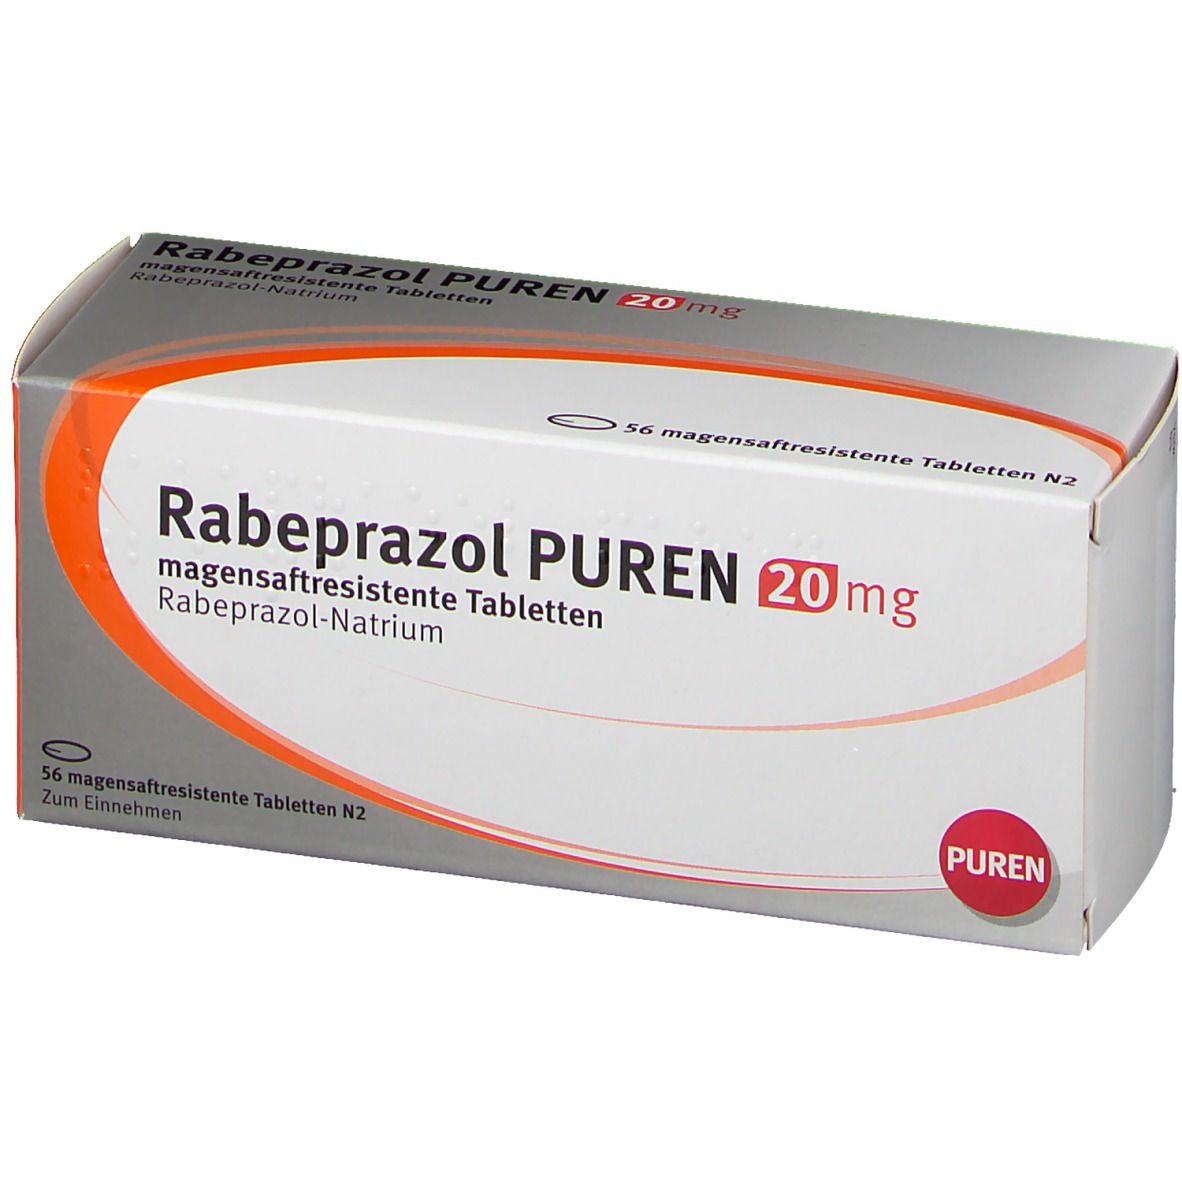 Rabeprazol PUREN 20 mg